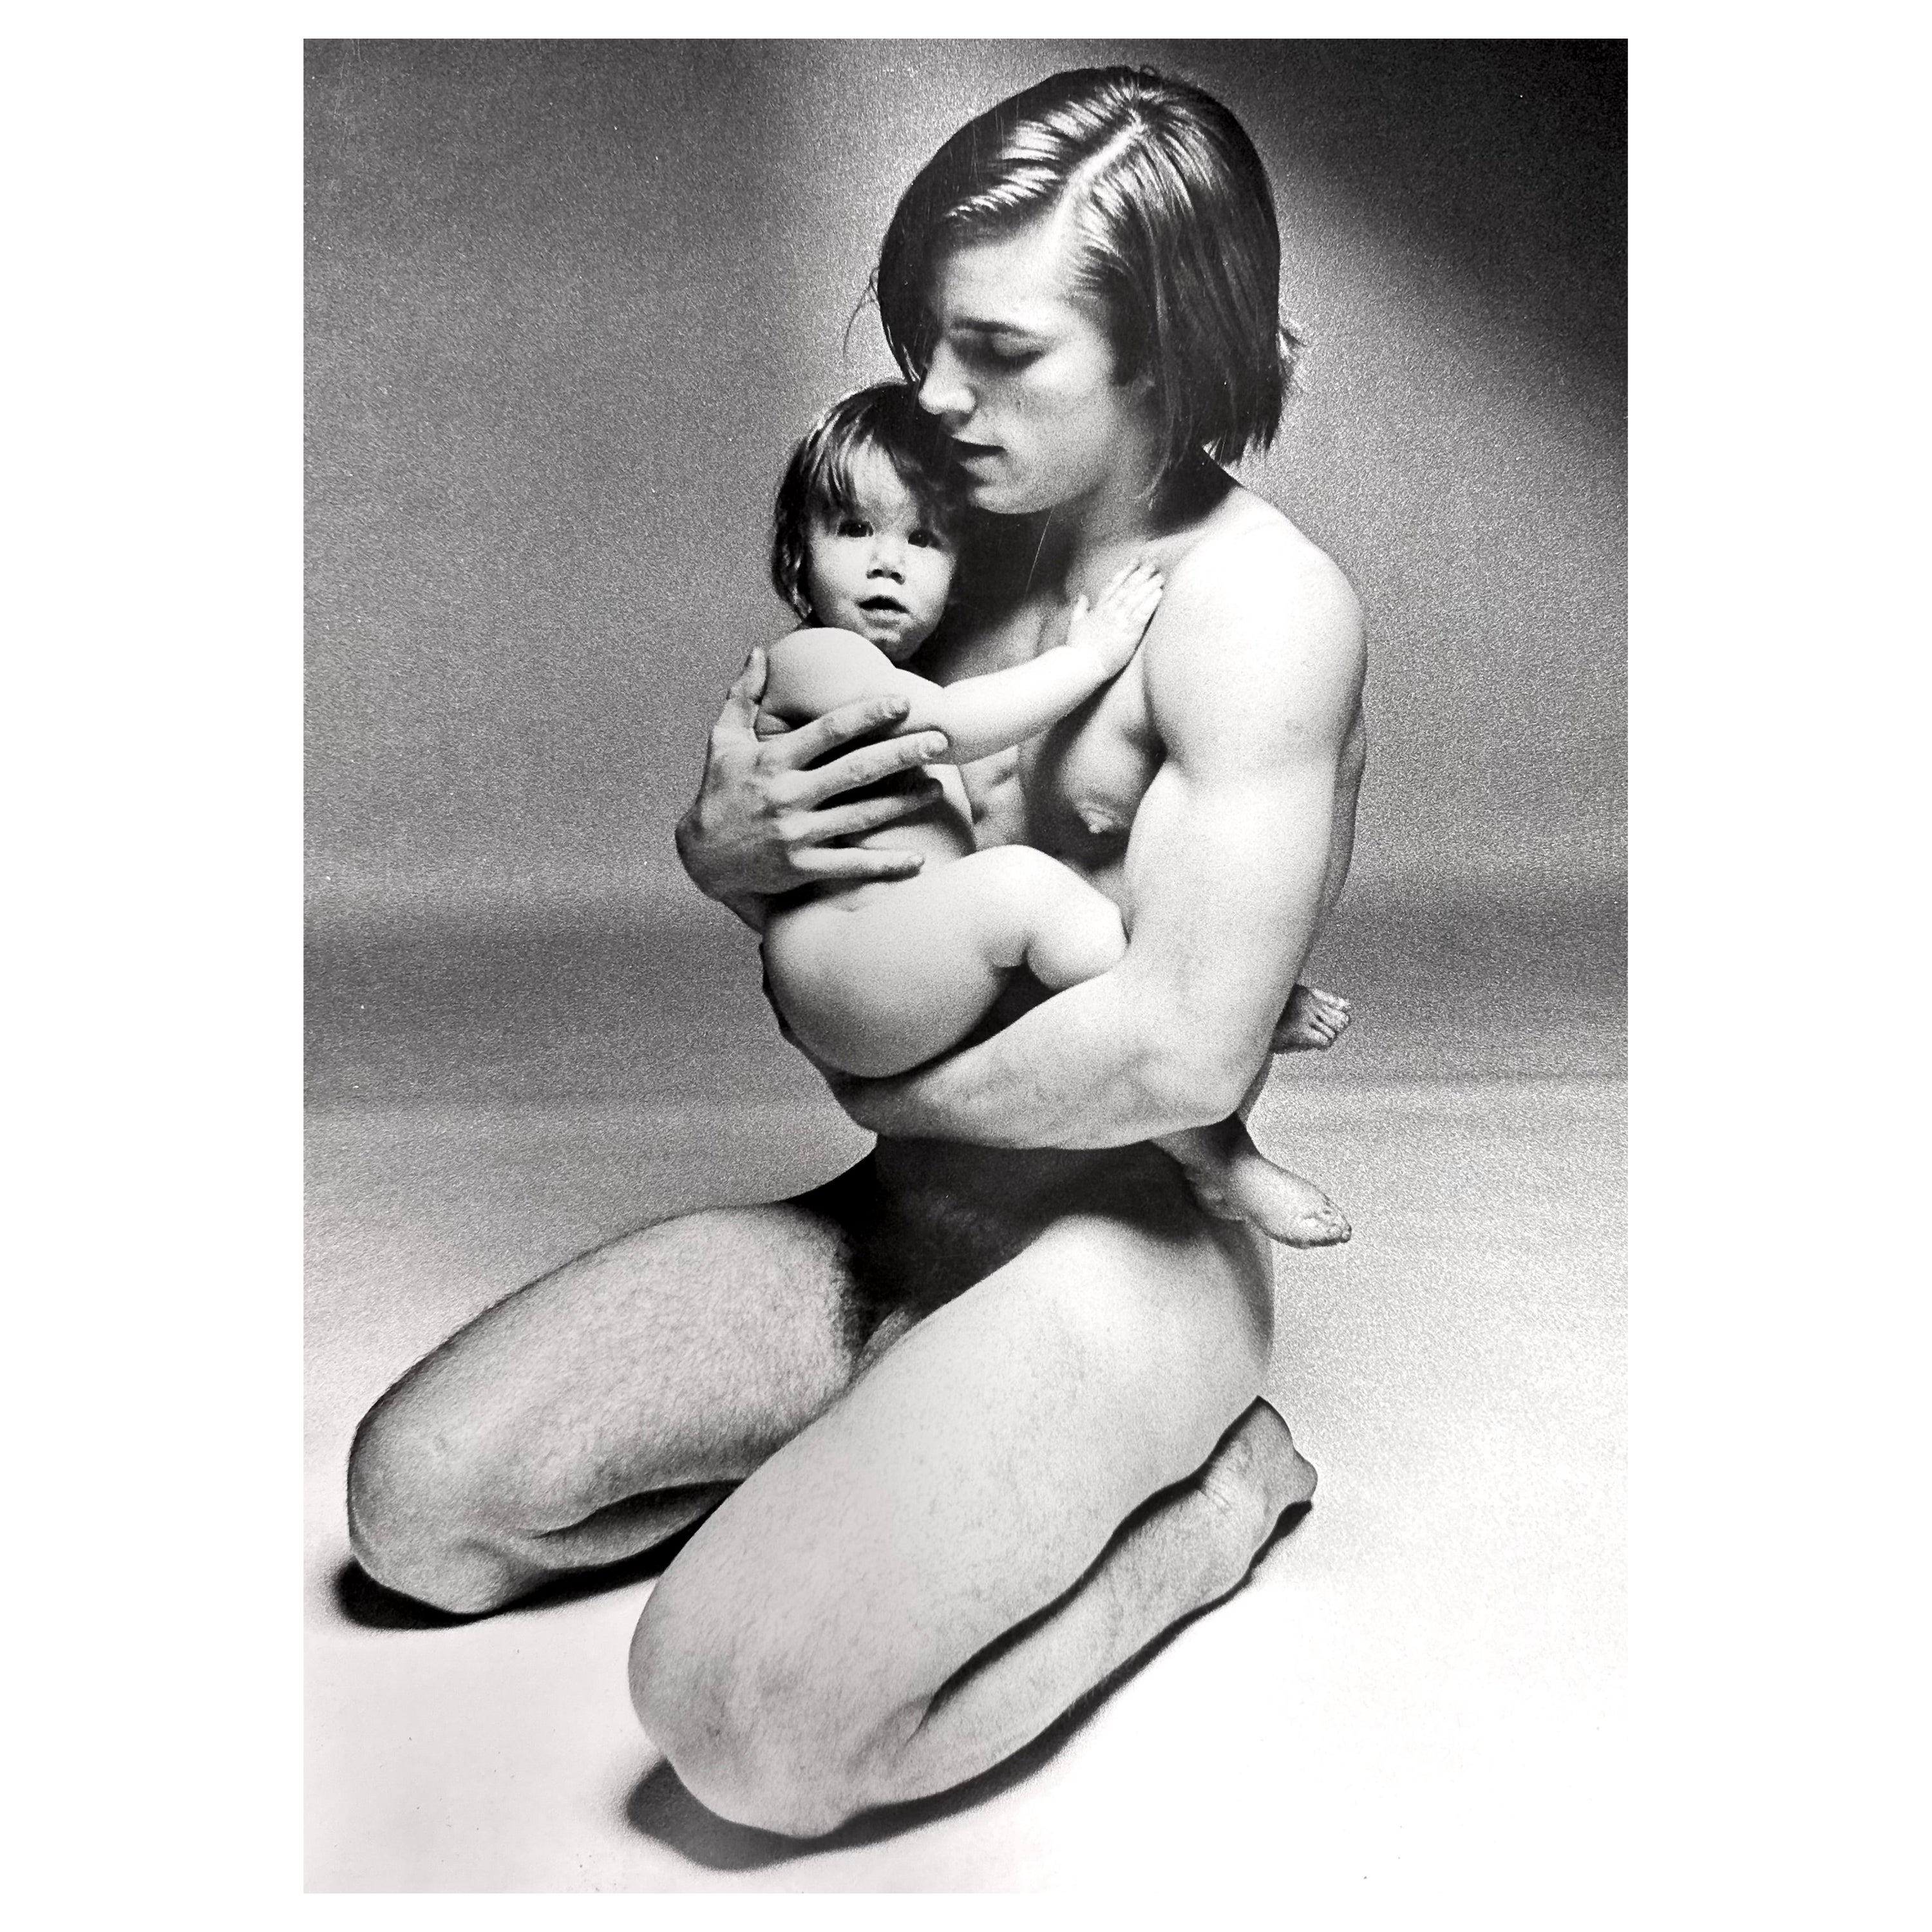 Francesco Scavullo, Andy Warhol's Flesh: Joe Dallesandro with Child II, 1968